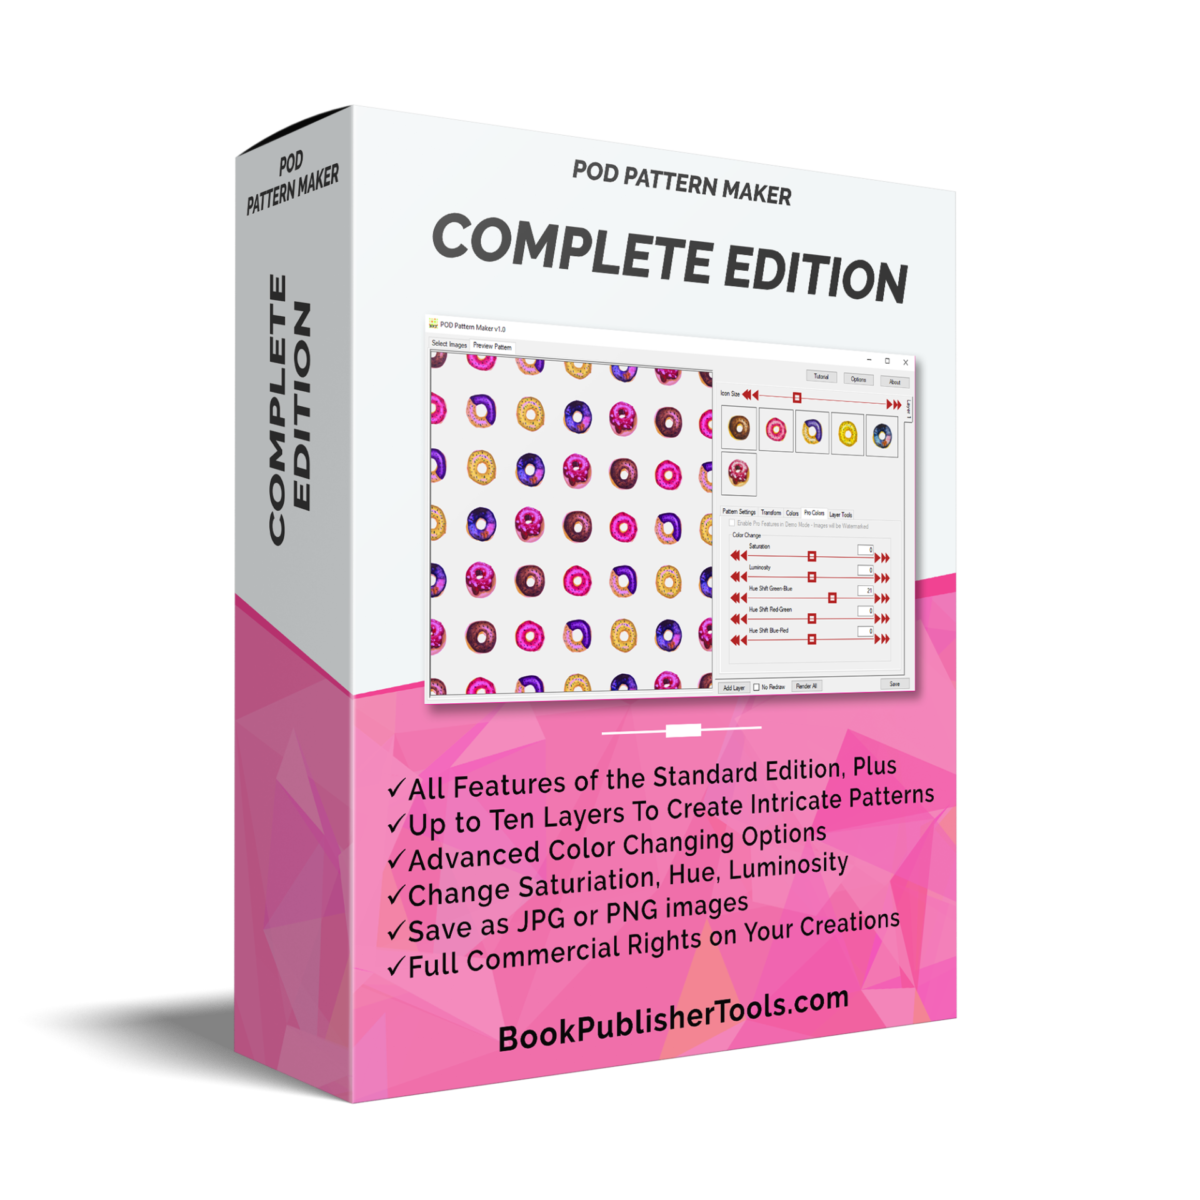 POD Pattern Maker Complete Edition software box